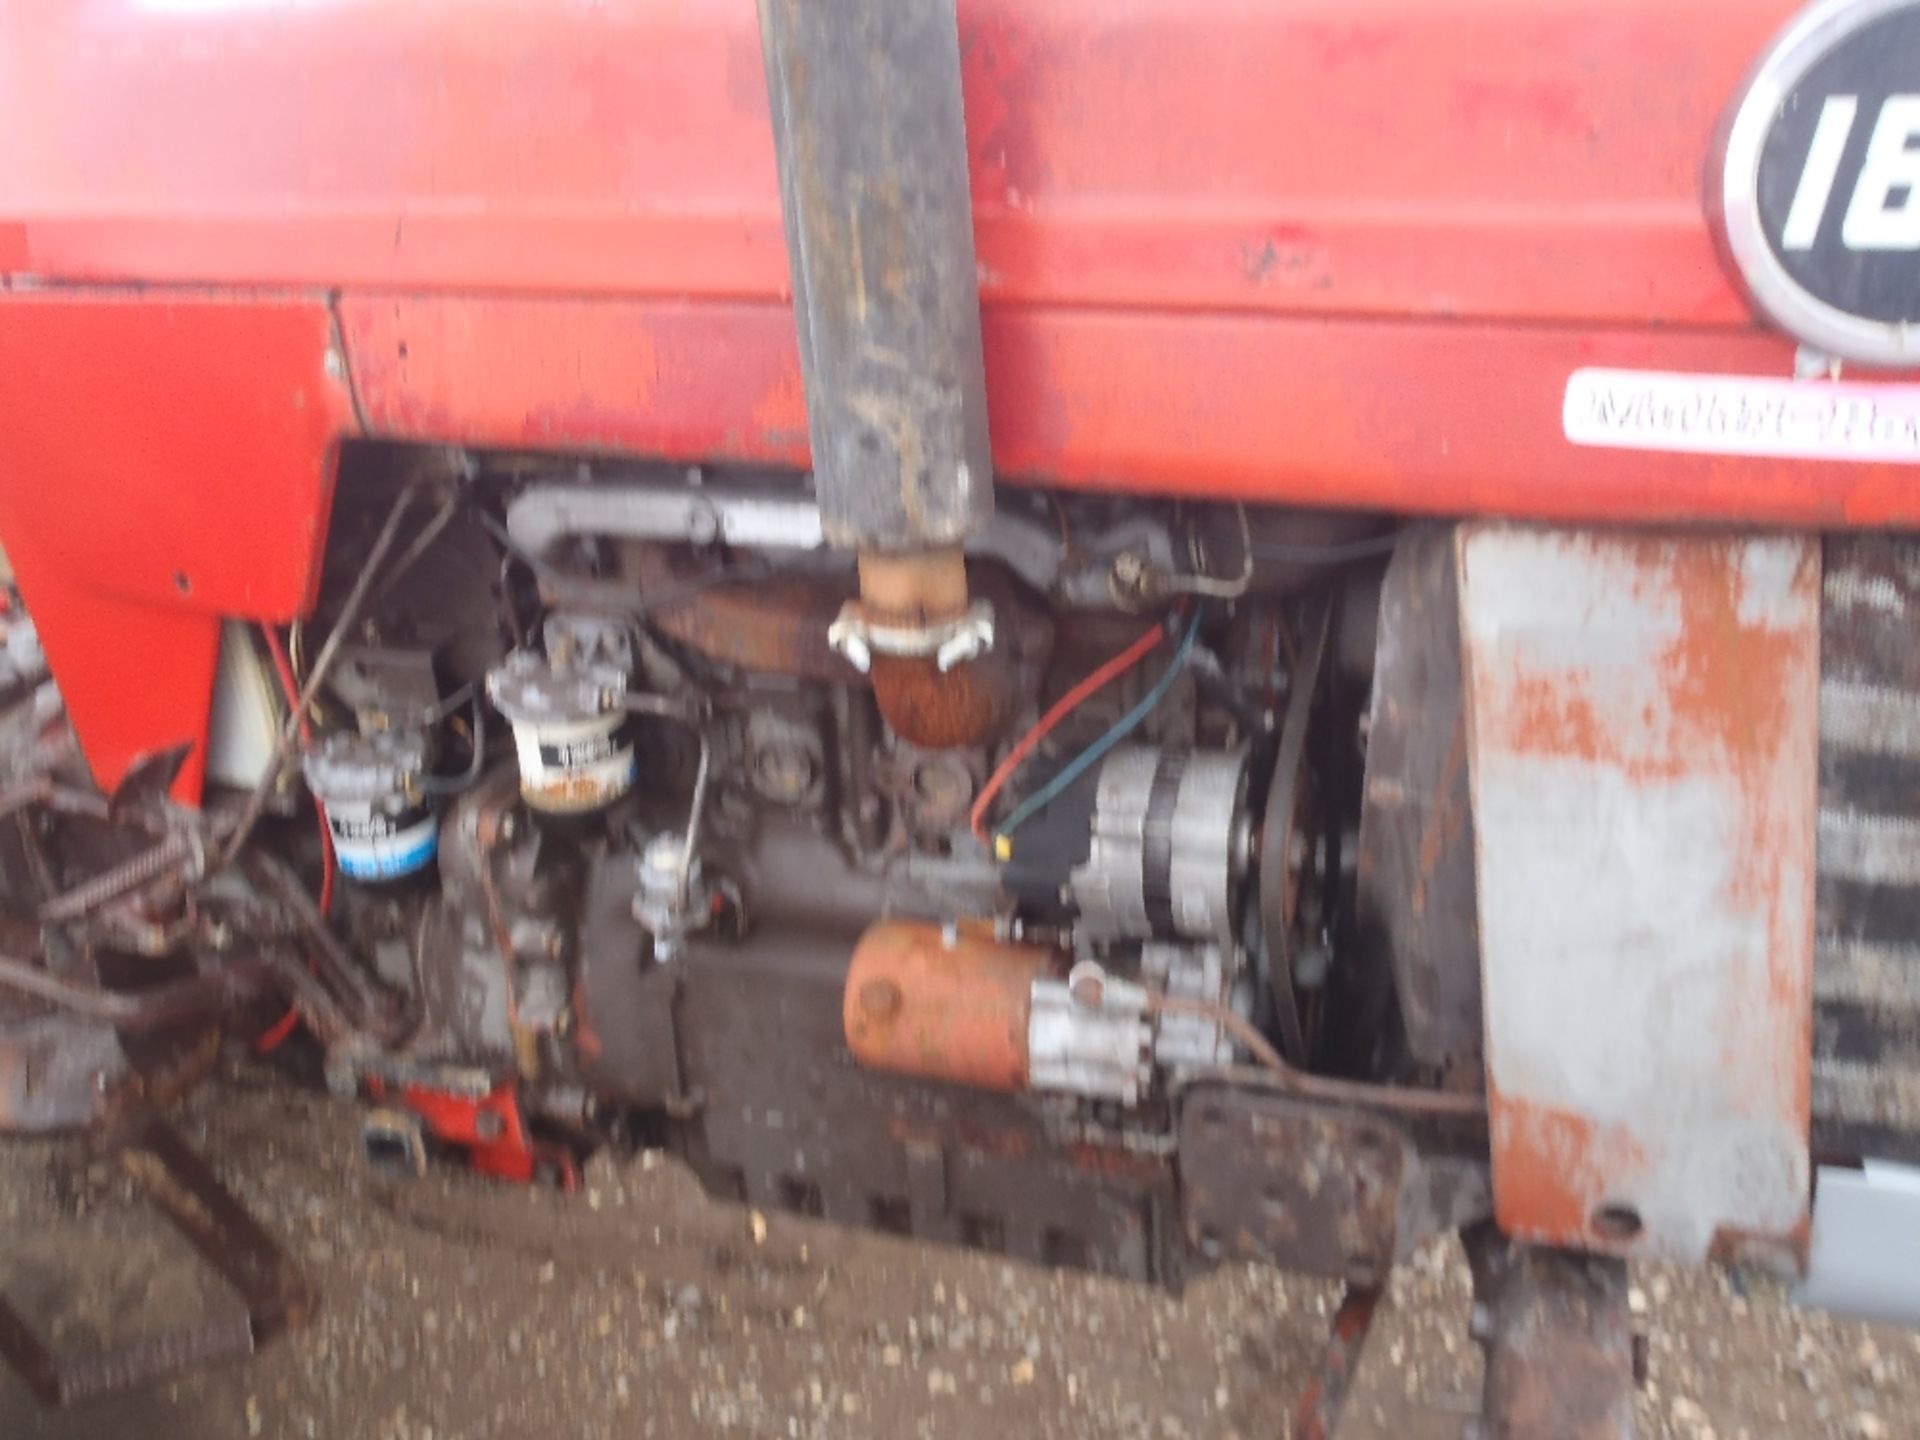 Massey Ferguson 185 2wd Tractor Ser.No.320154 Reg No 76 DL 38 - Image 5 of 8